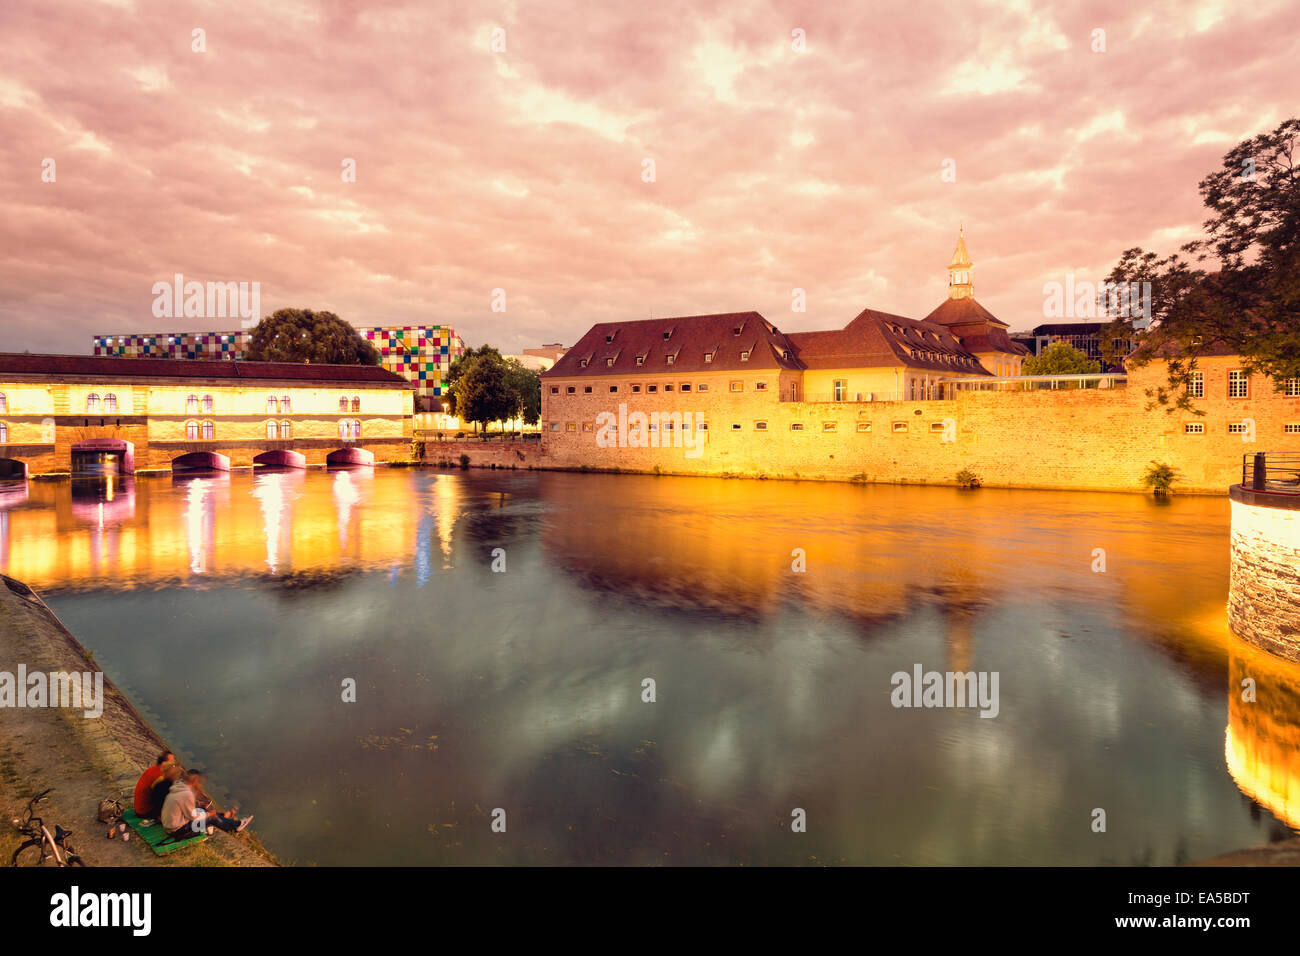 France, Alsace, Strasbourg, Petite France, Barrage Vauban, River lll in the evening light Stock Photo